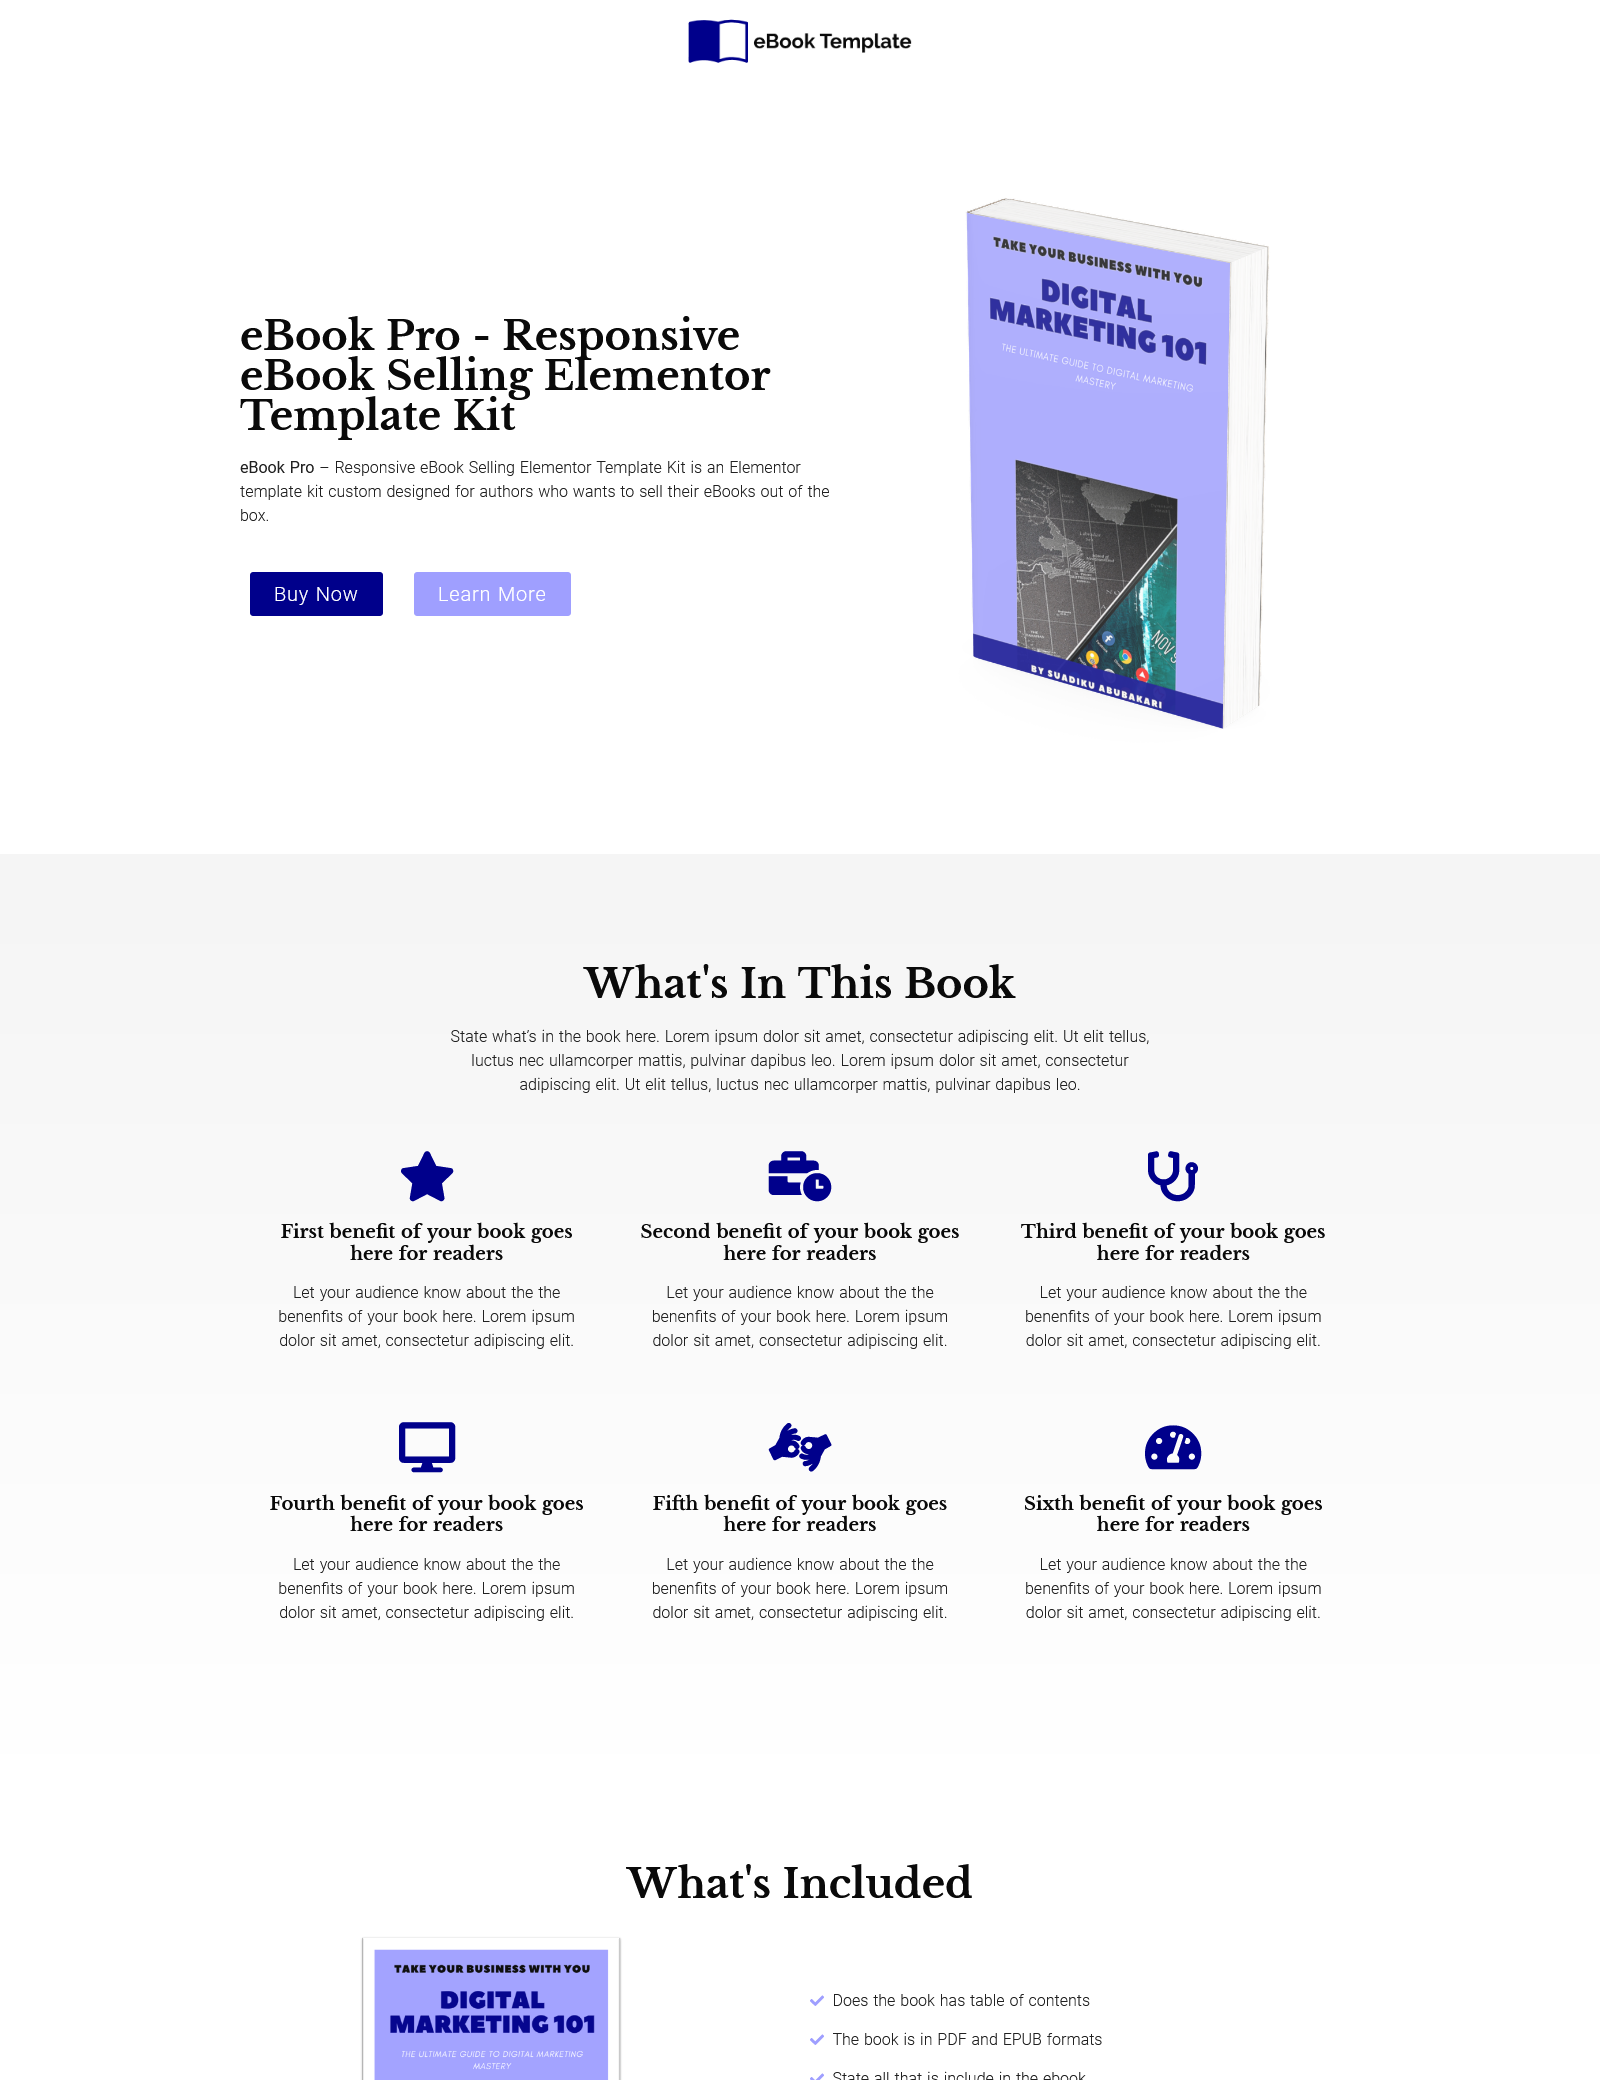 eBook Pro Responsive eBook Selling Elementor Template Kit